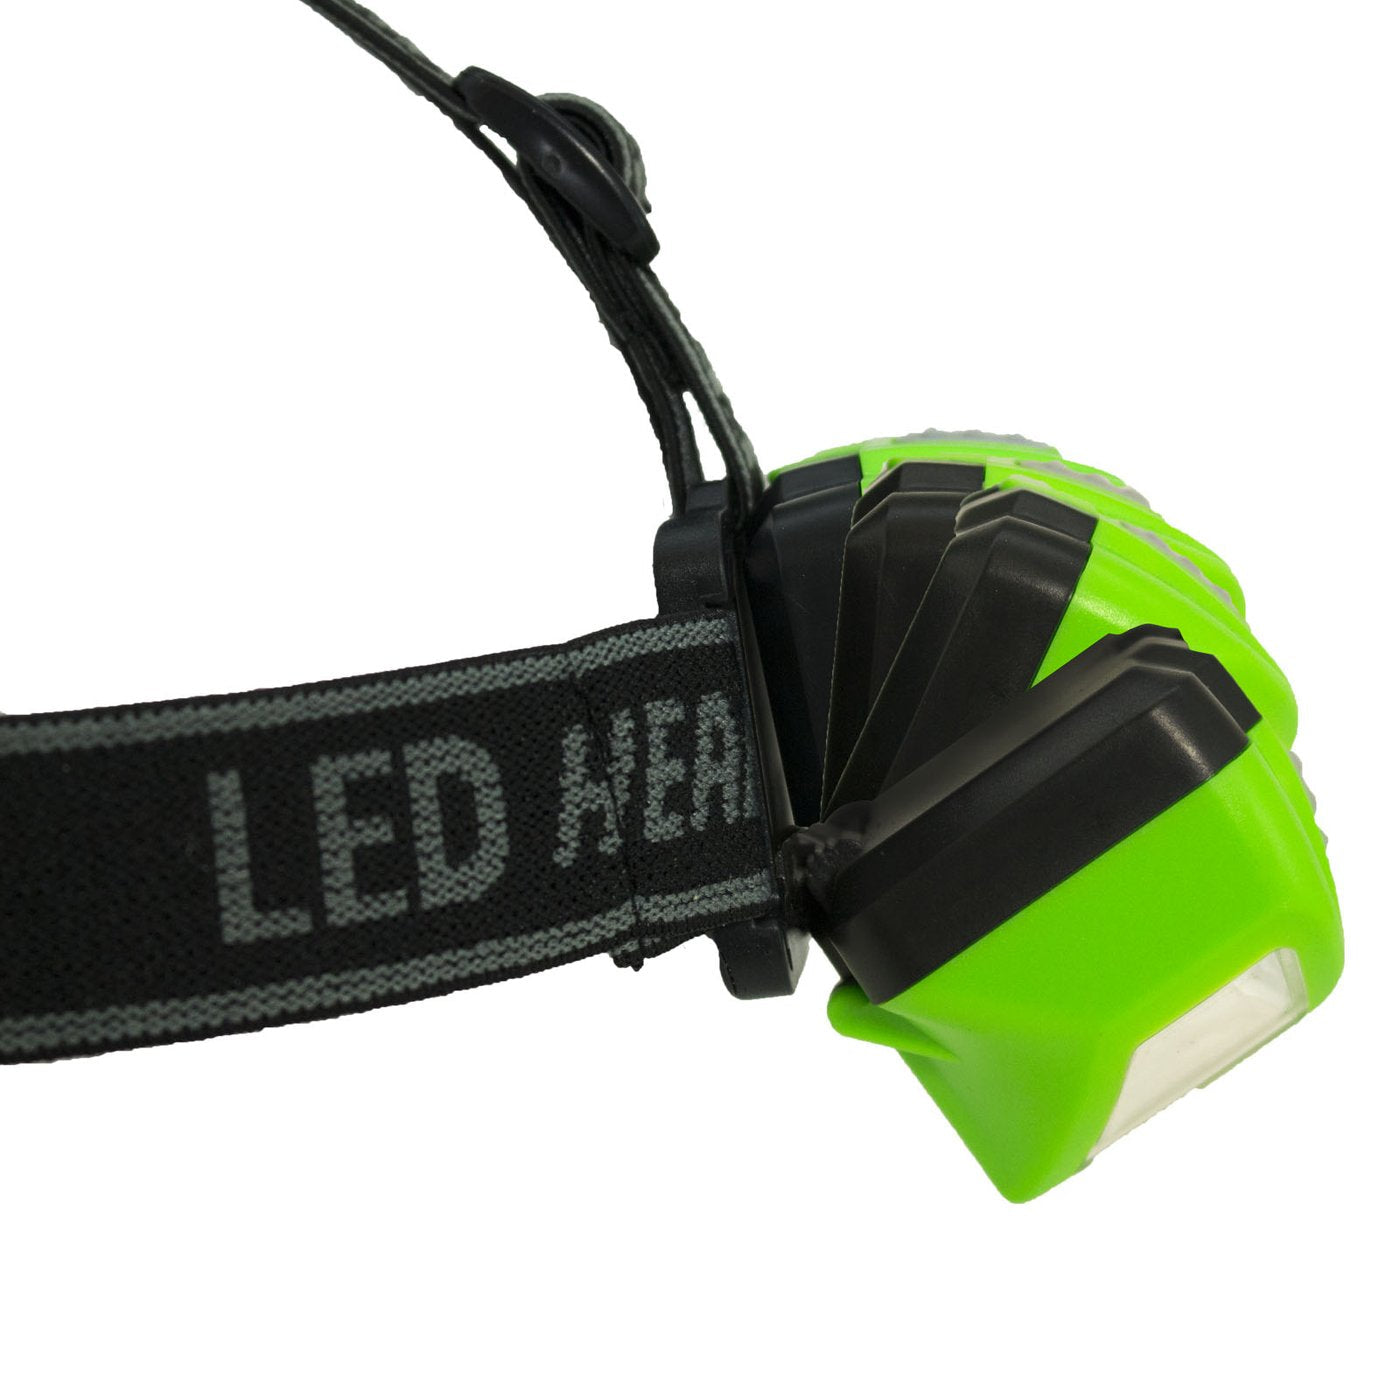 LitezAll | Quattro 4 Mode LED Head Lamp, Headlamp, LitezAll, Defiance Outdoor Gear Co.